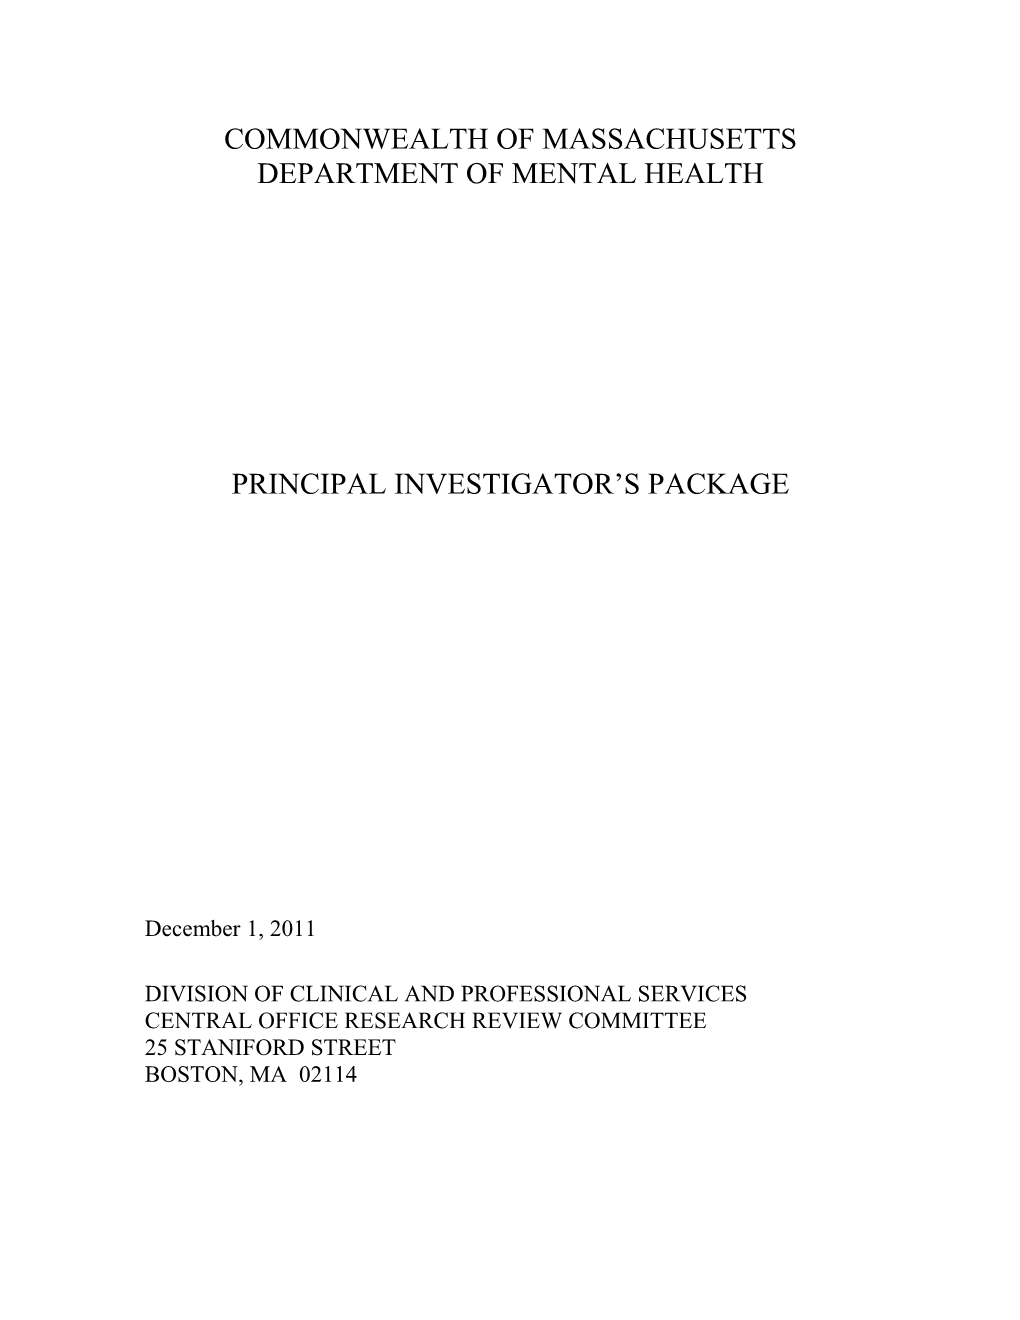 Commonwealth of Massachusetts Department of Mental Health